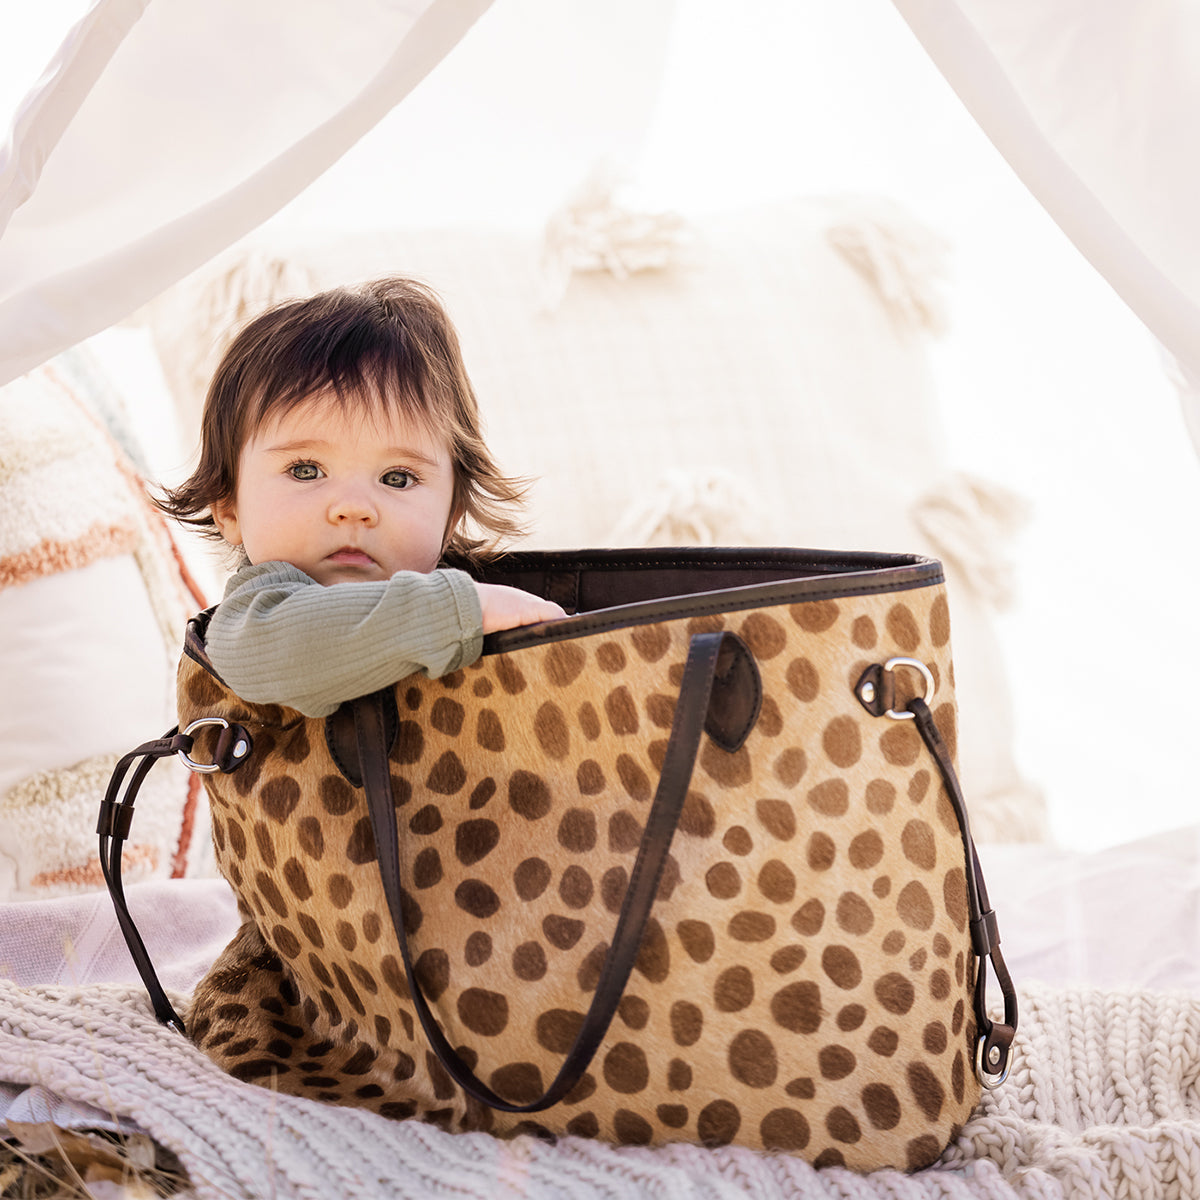 FREEBIRD Mara leopard calf hair tote bag with top handles and interior zip pocket